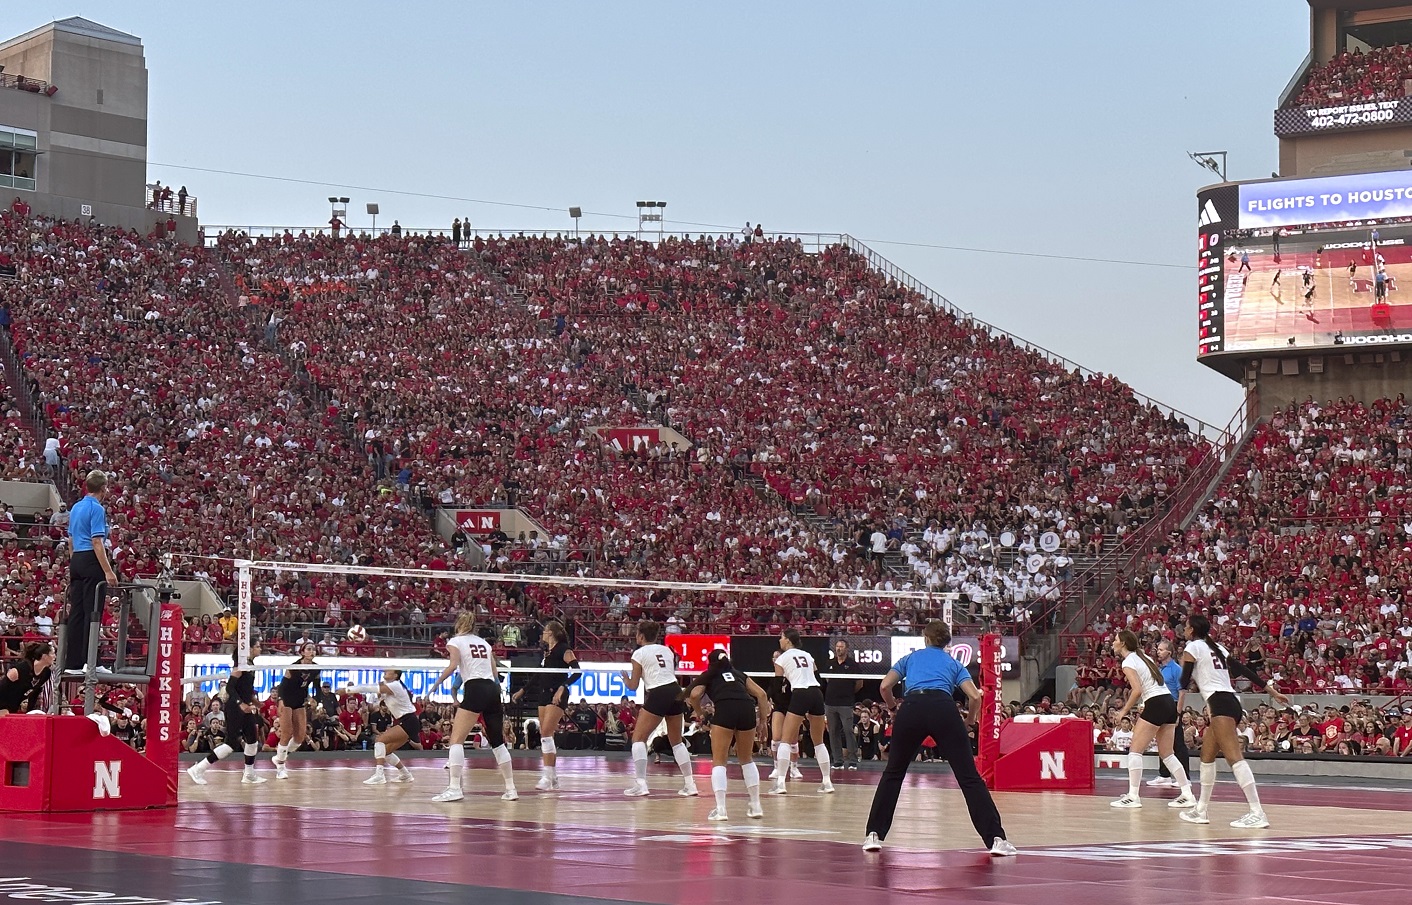 Nebraska volleyball breaks Badgers record, sets women’s world attendance record with 92,000